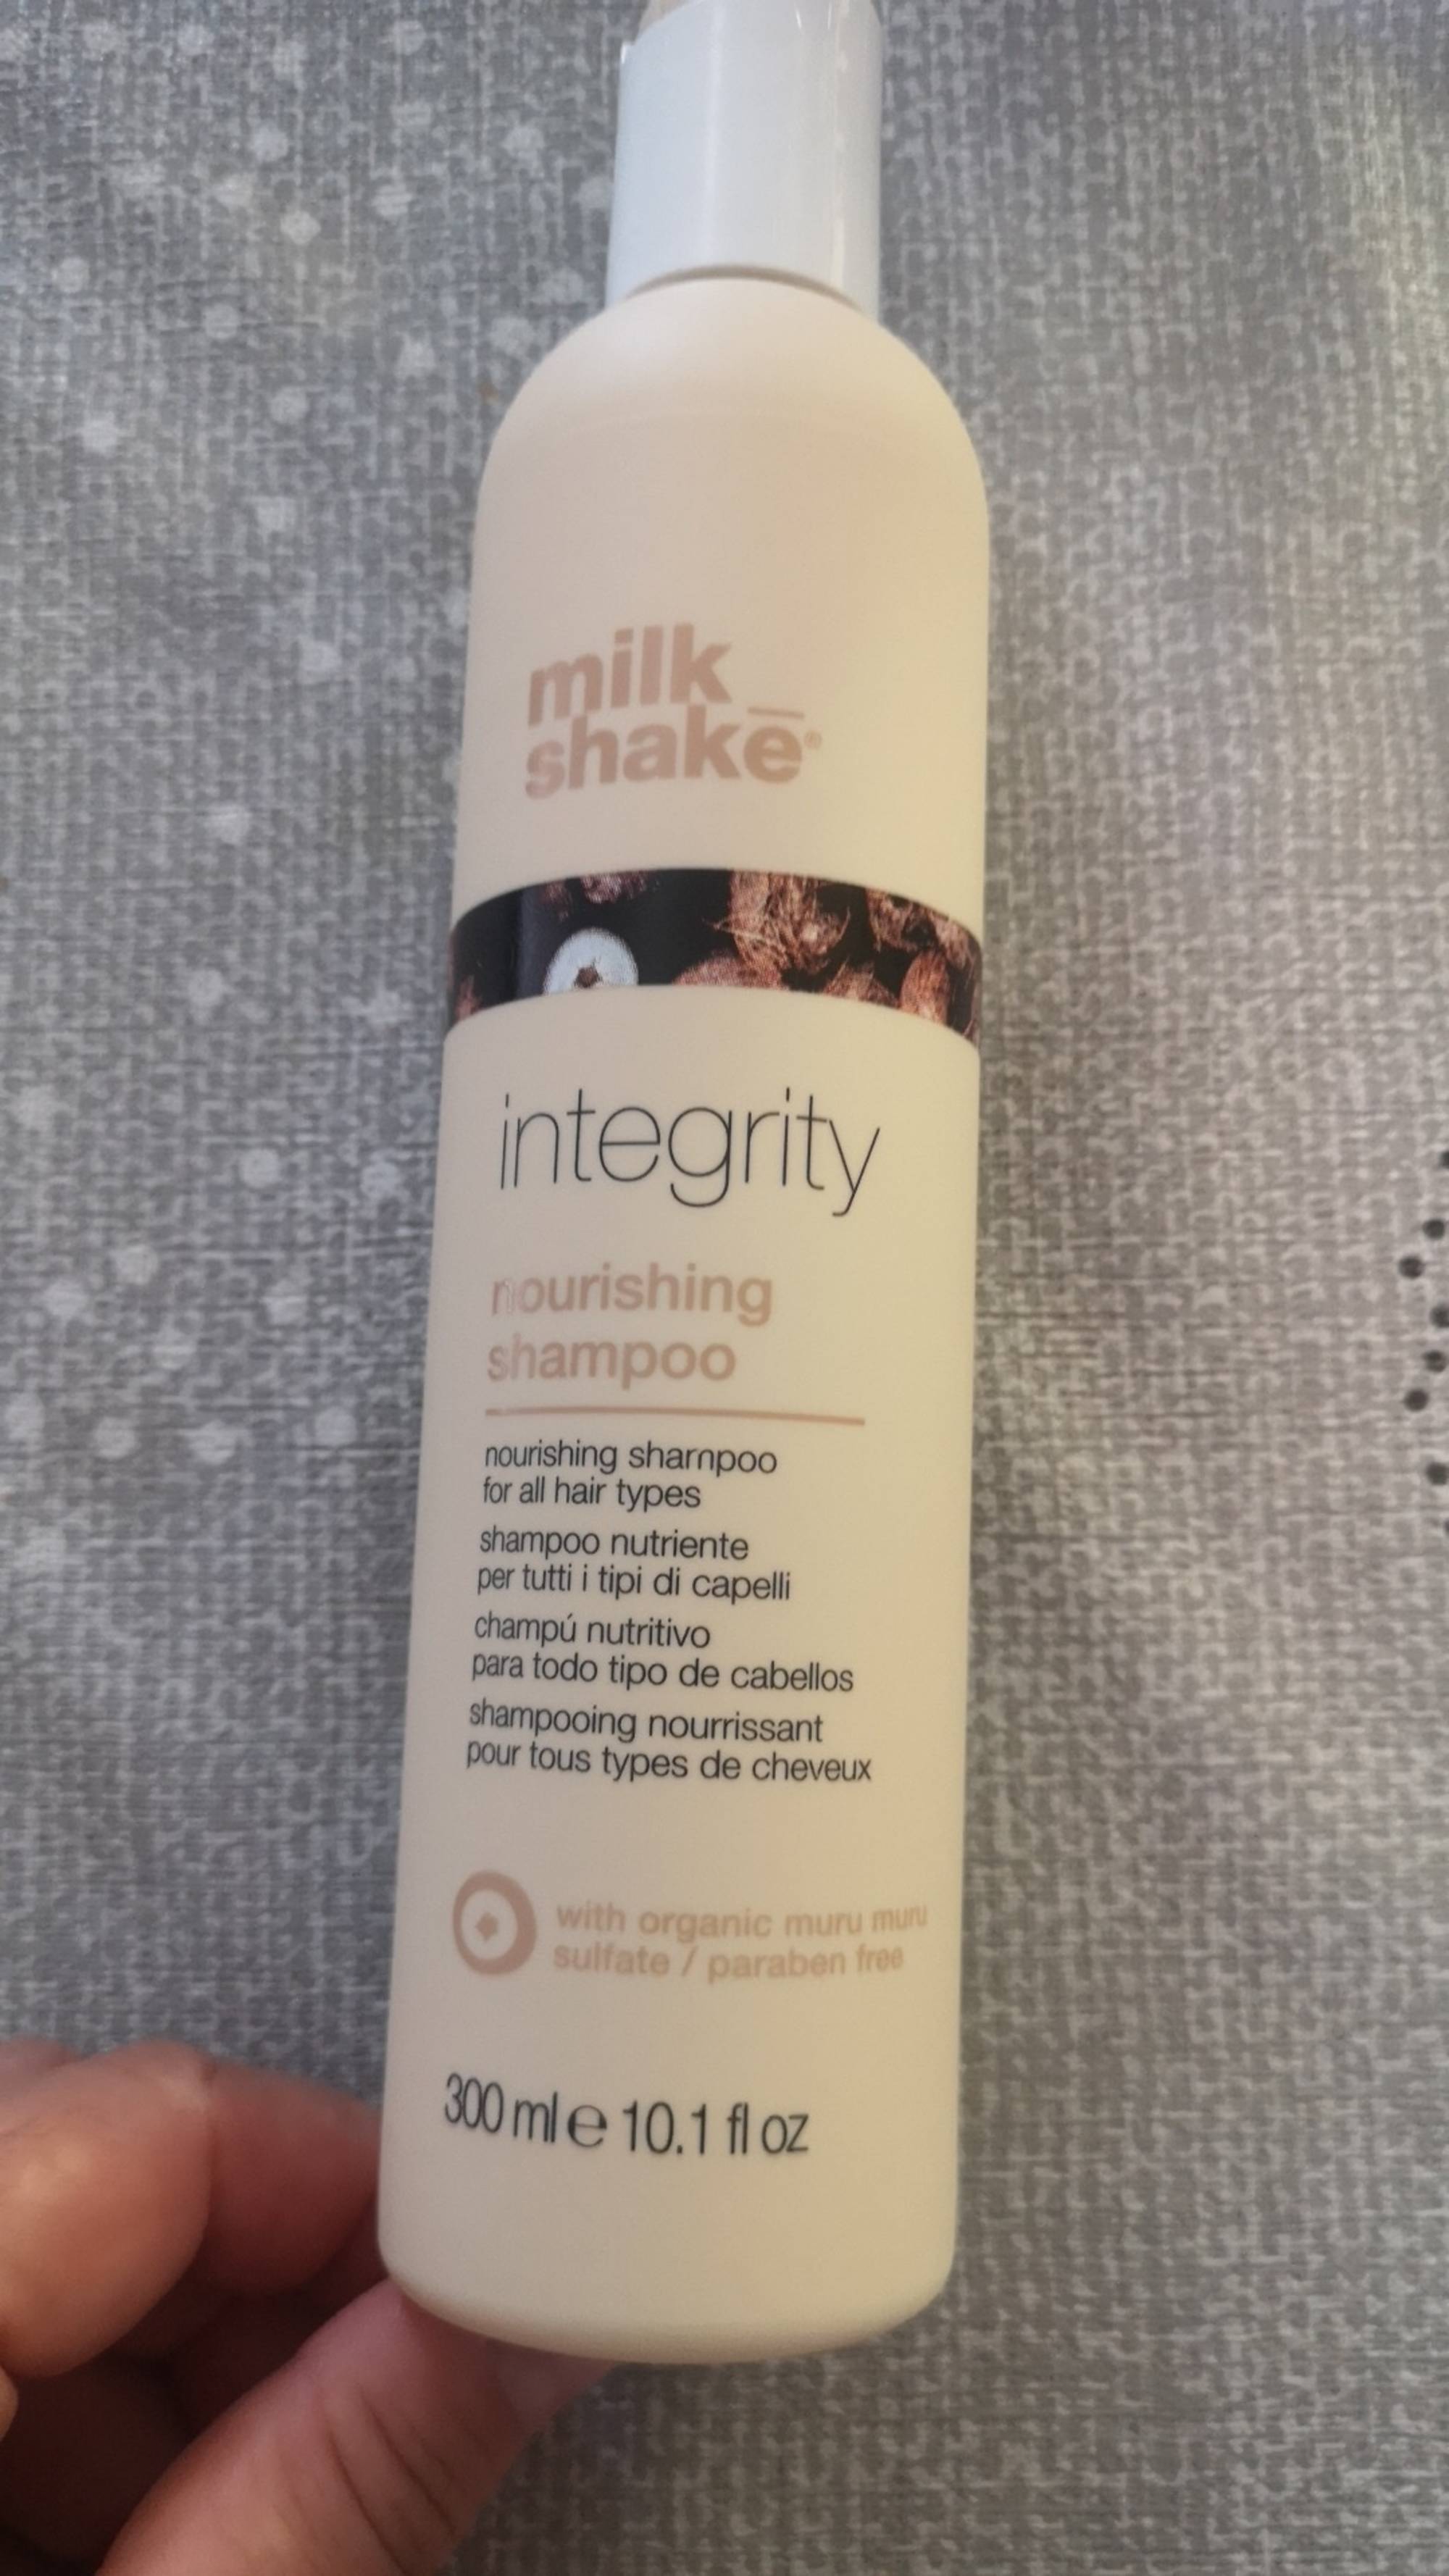 MILK SHAKE - Integrity - Nourishing shampoo